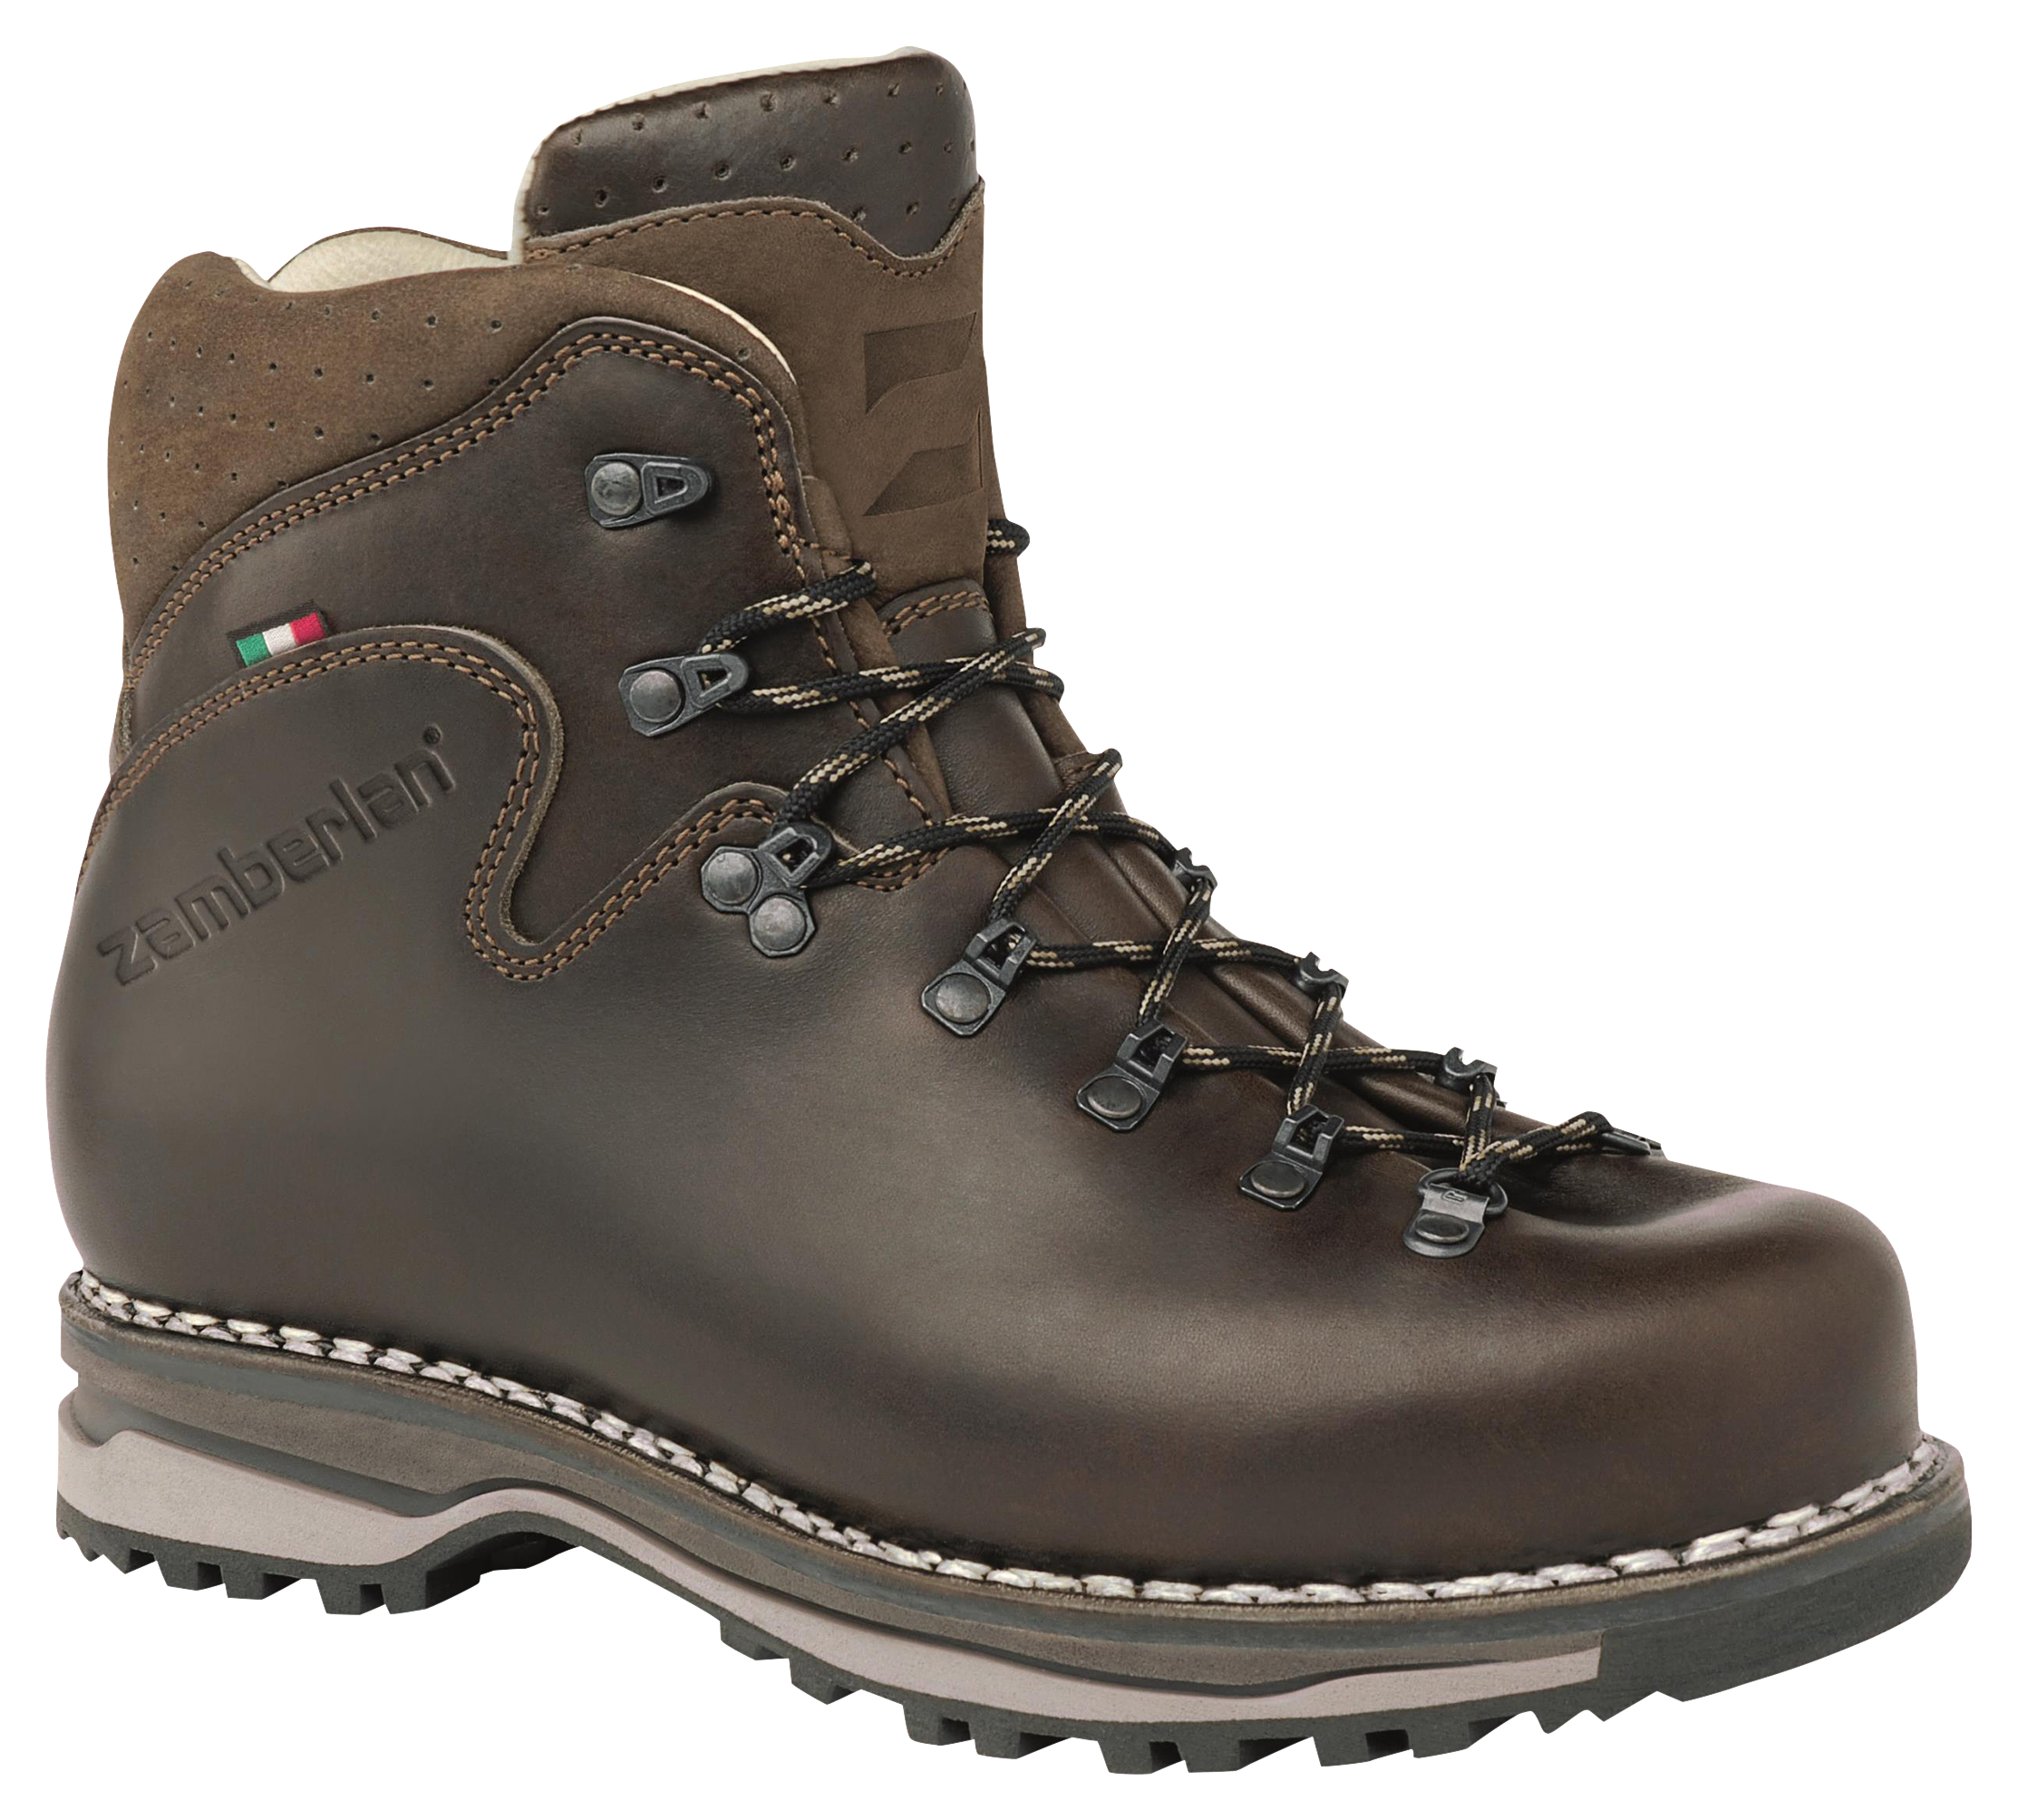 Zamberlan Latemar NW Hiking Boots for Men - Waxed Dark Brown - 12M